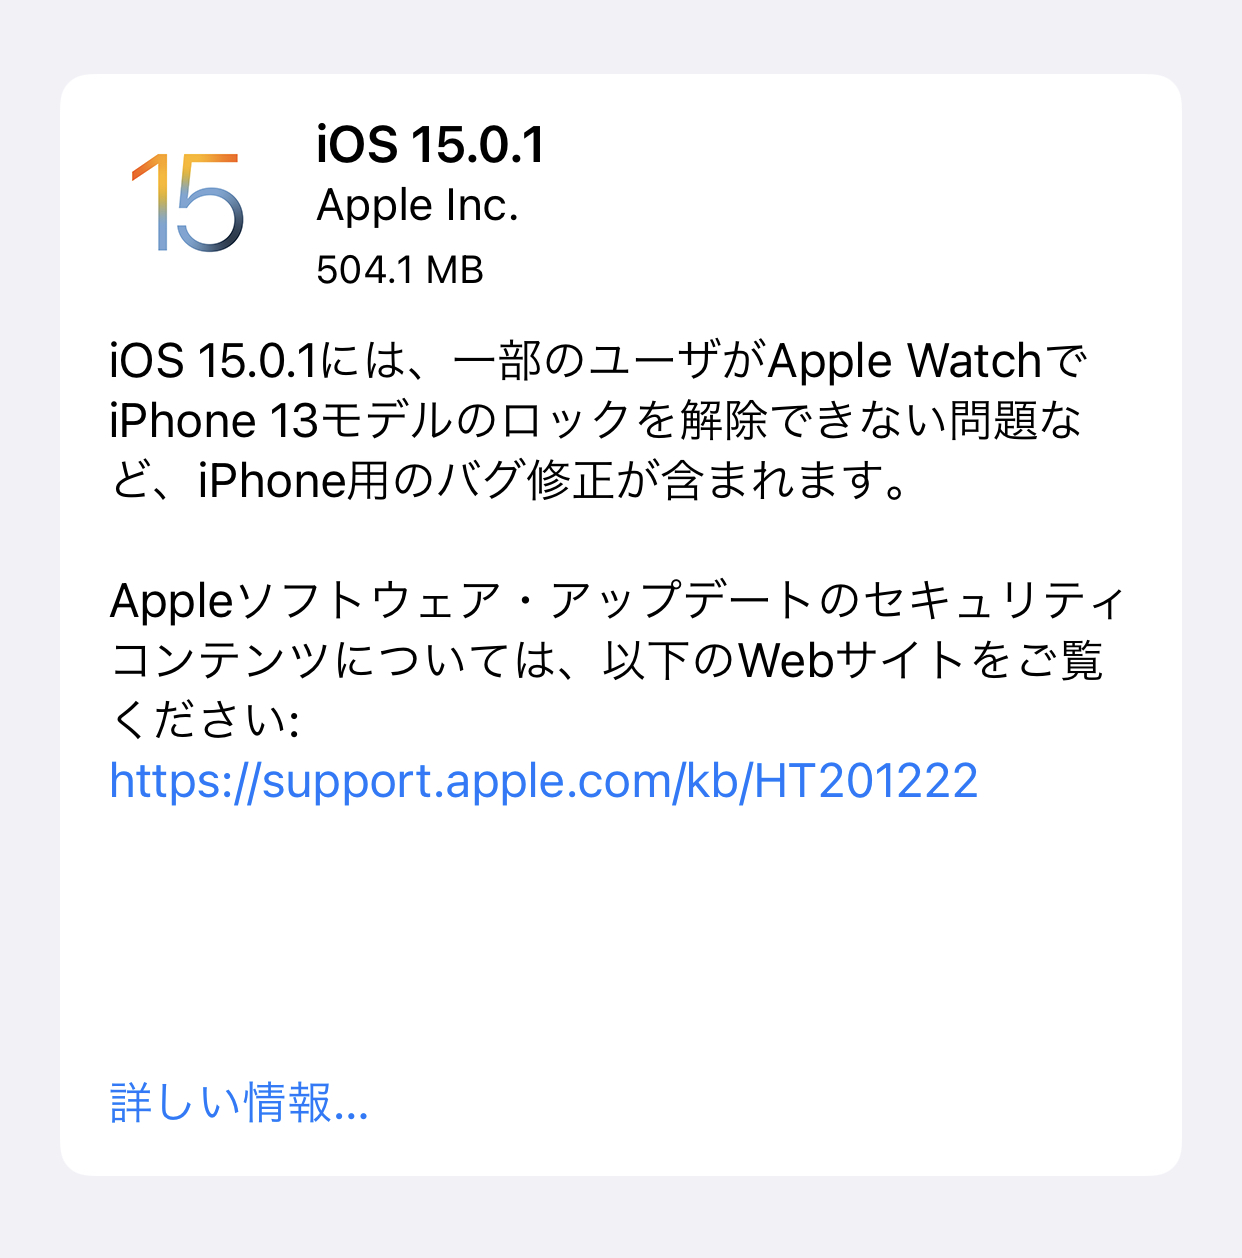 Appleが、iOS 15.0.1ソフトウェア・アップデートの配信を開始しました。